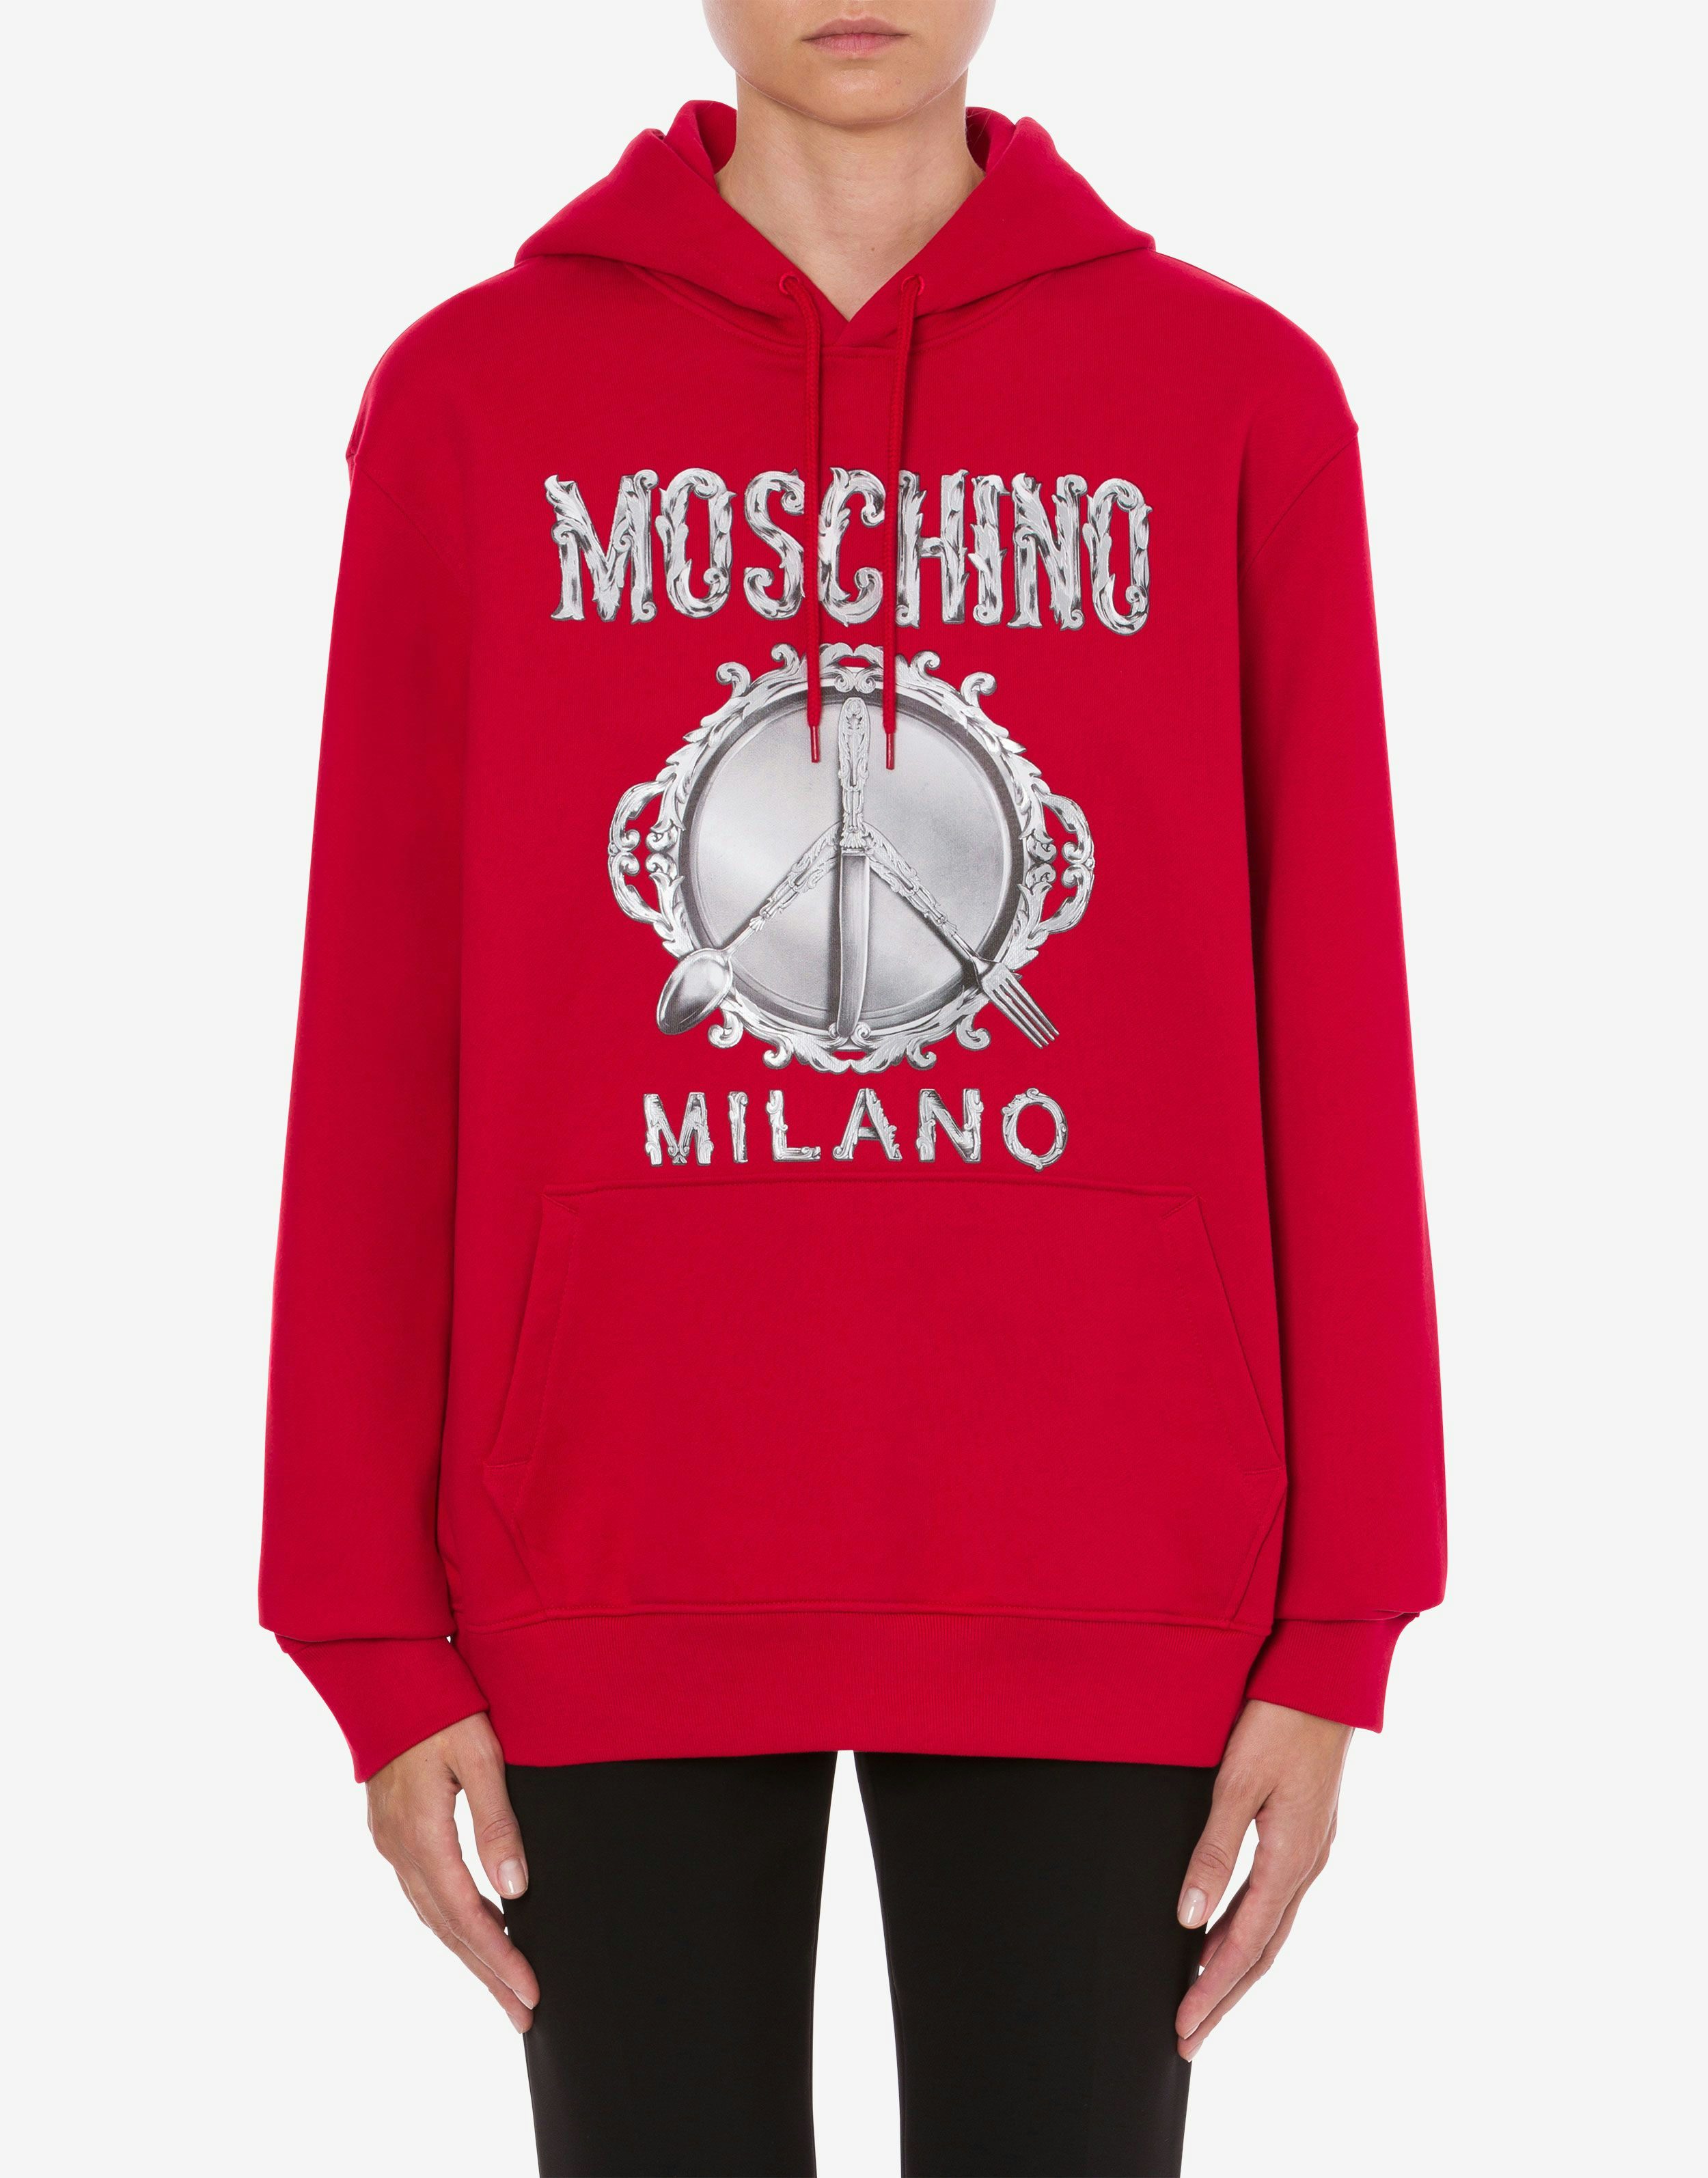 38 PUT OFFER Moschino Moschino Sweatshirt Hoodie Cotton Woman Pink V17055527 1147 Sz 